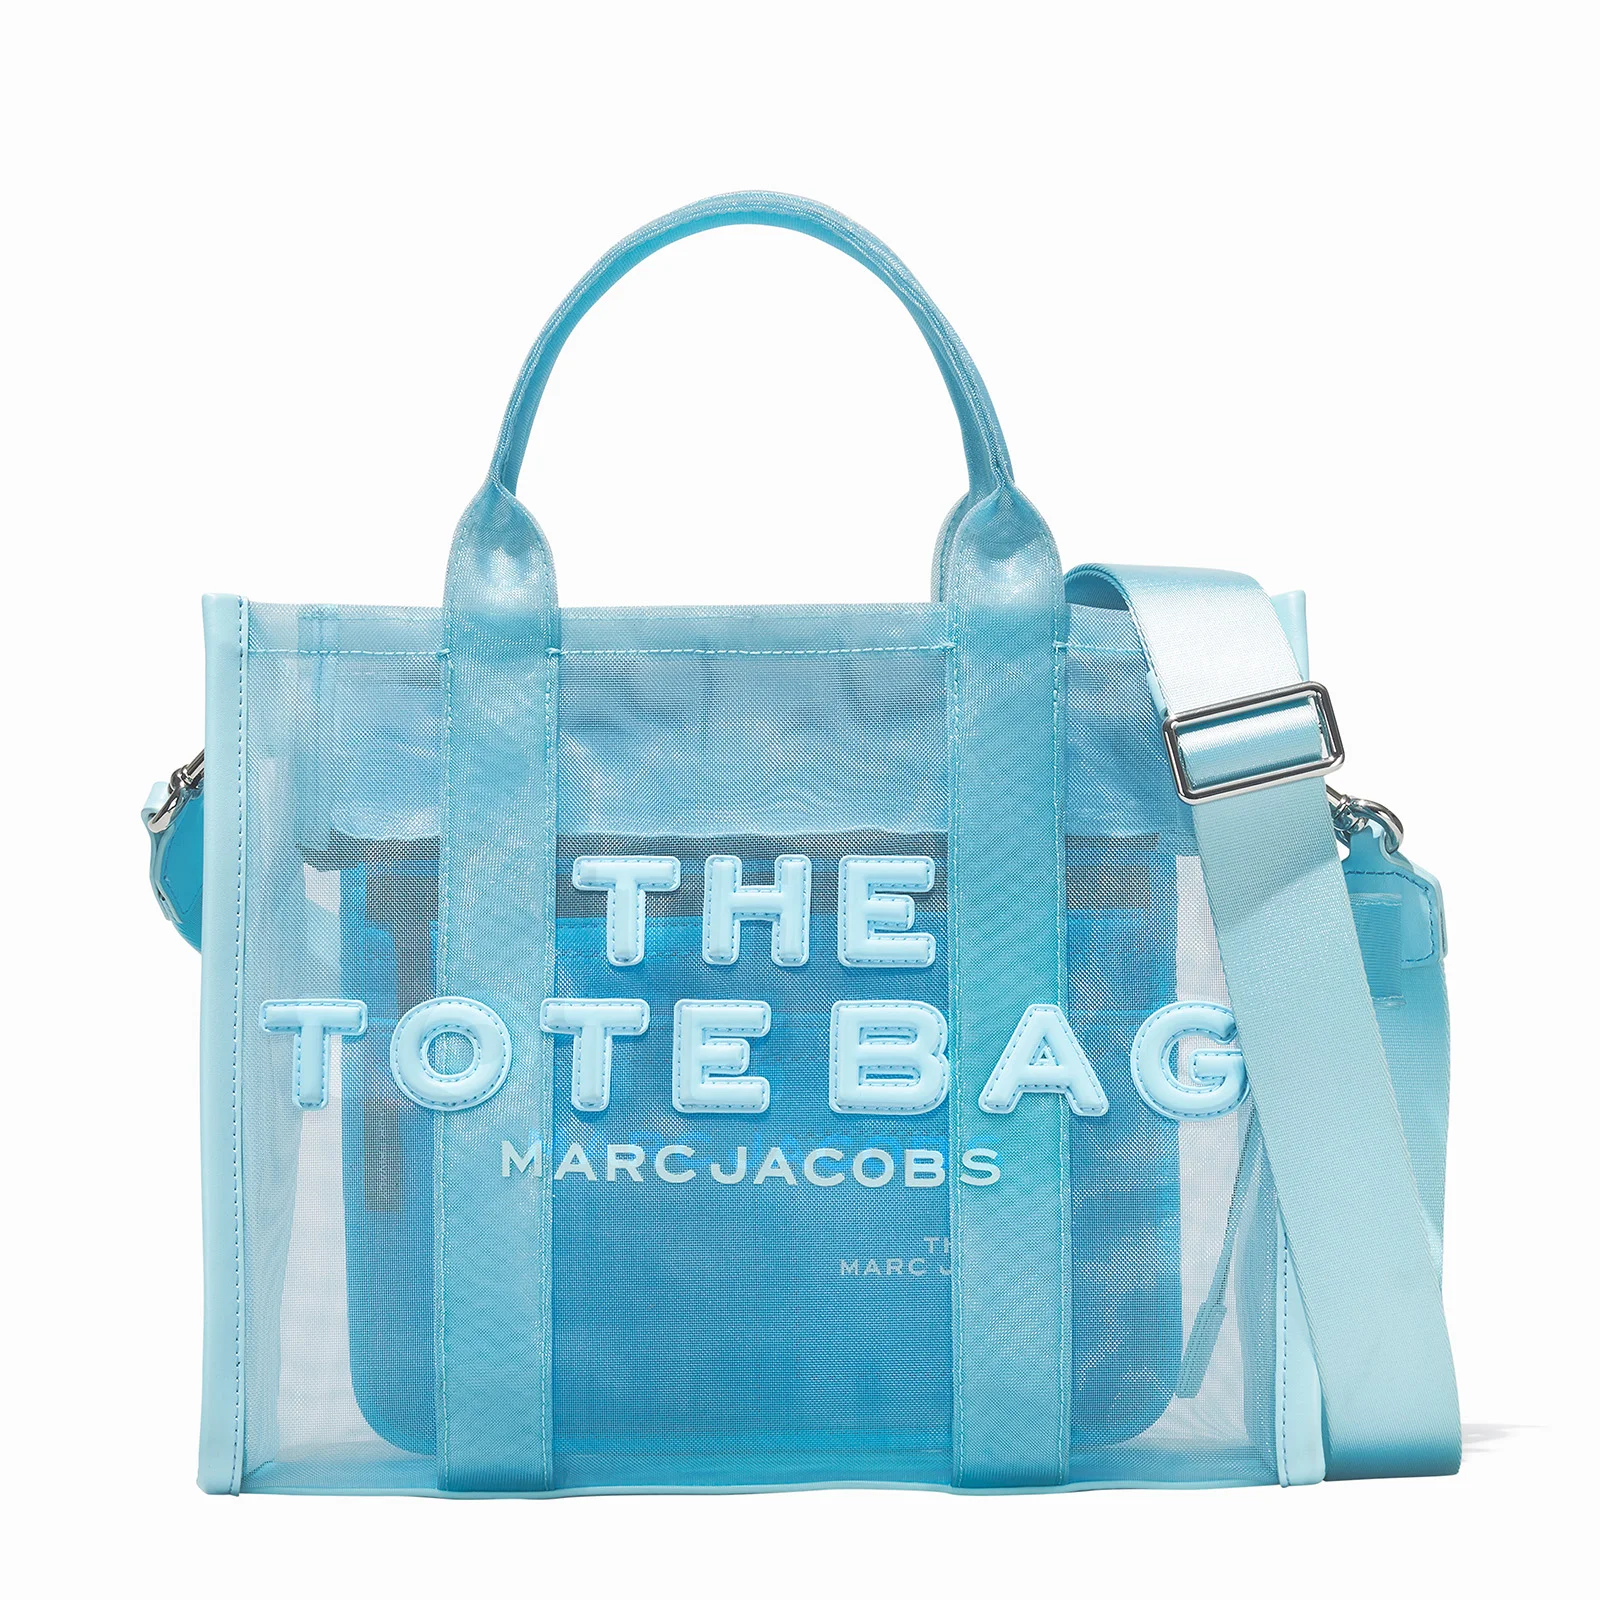 Marc Jacobs The Medium Mesh Tote Bag Image 1